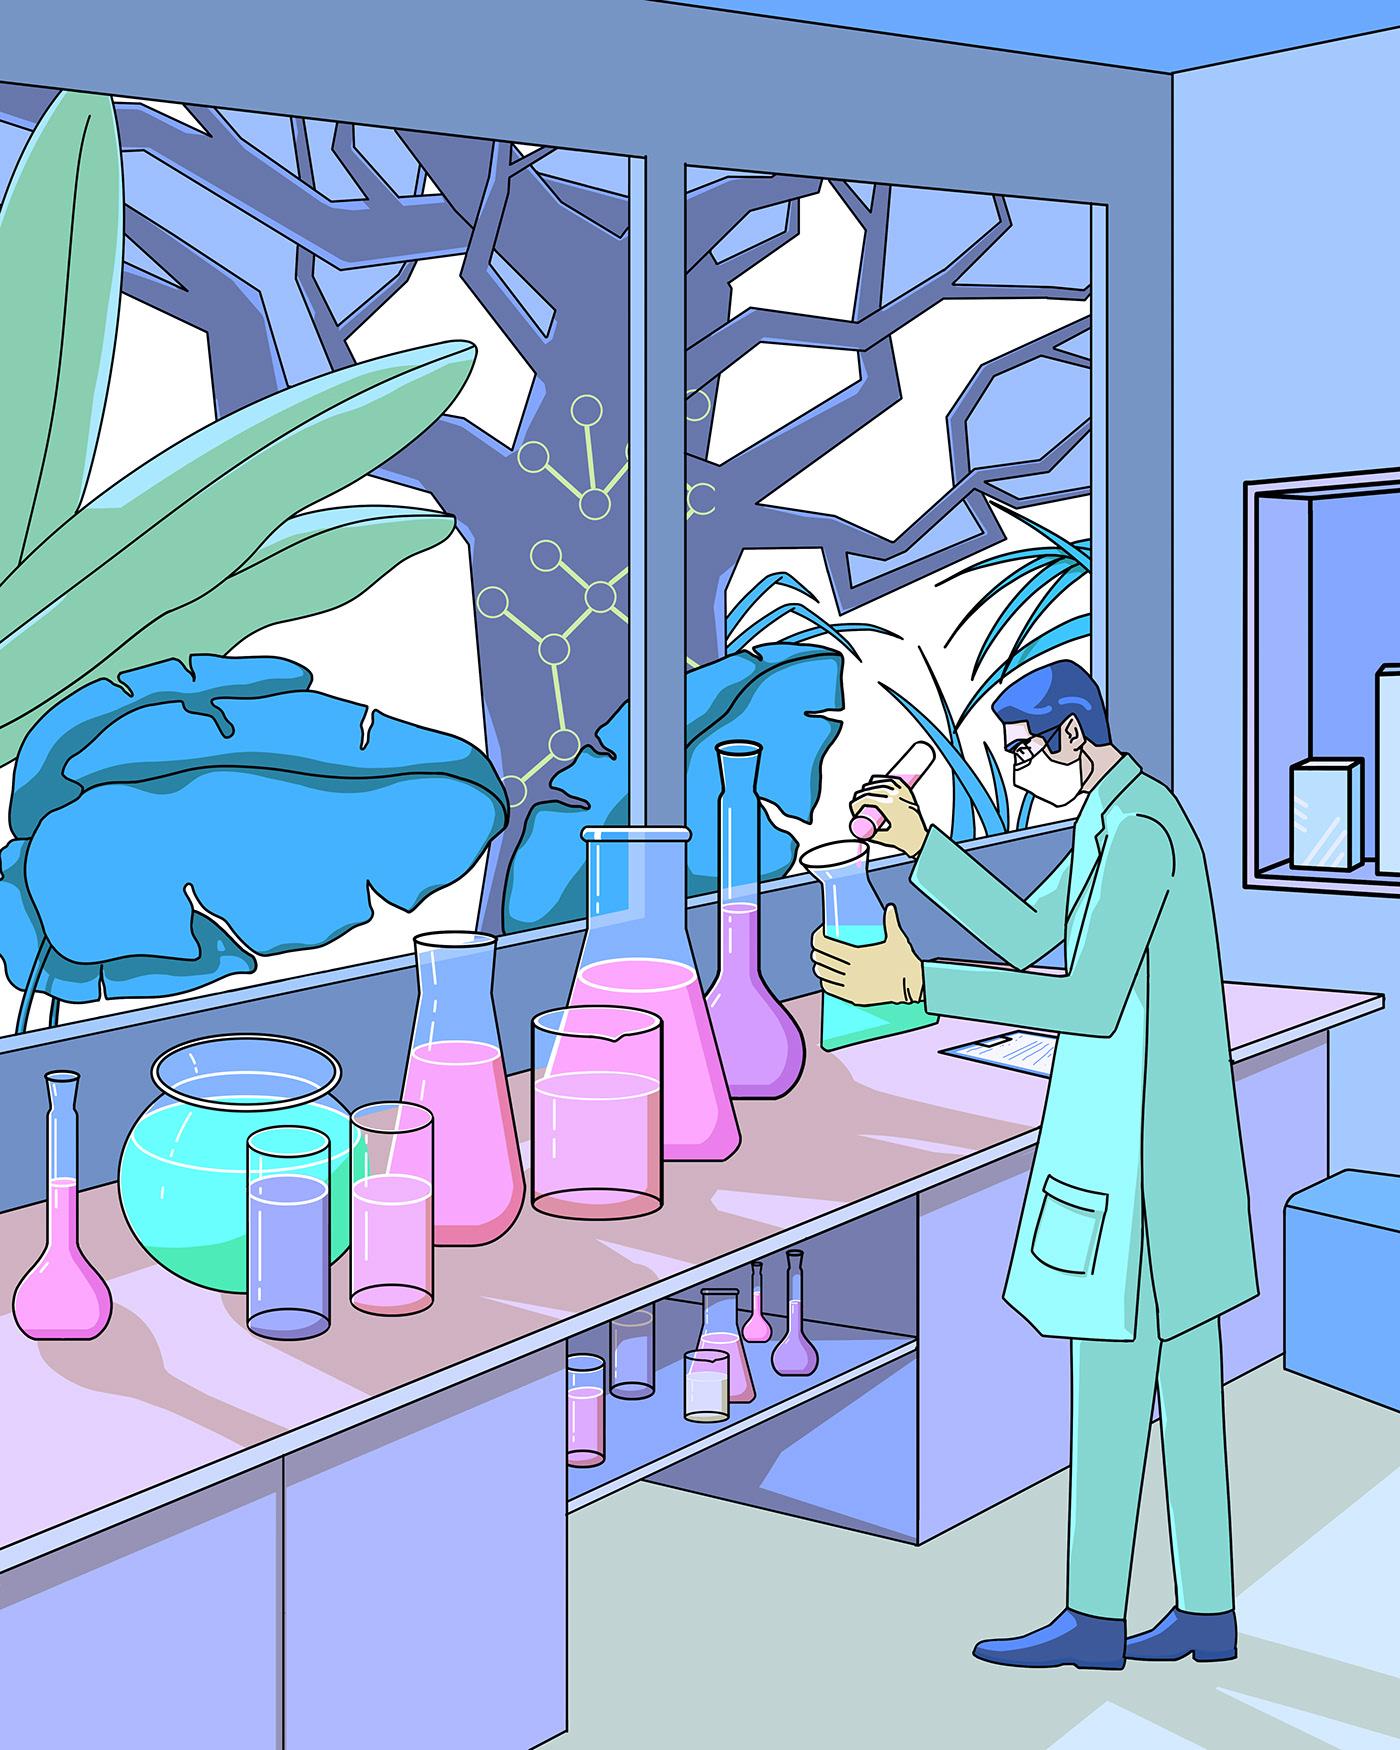 арт ILLUSTRATION  lab science chemistry chemist medicine Health digital illustration